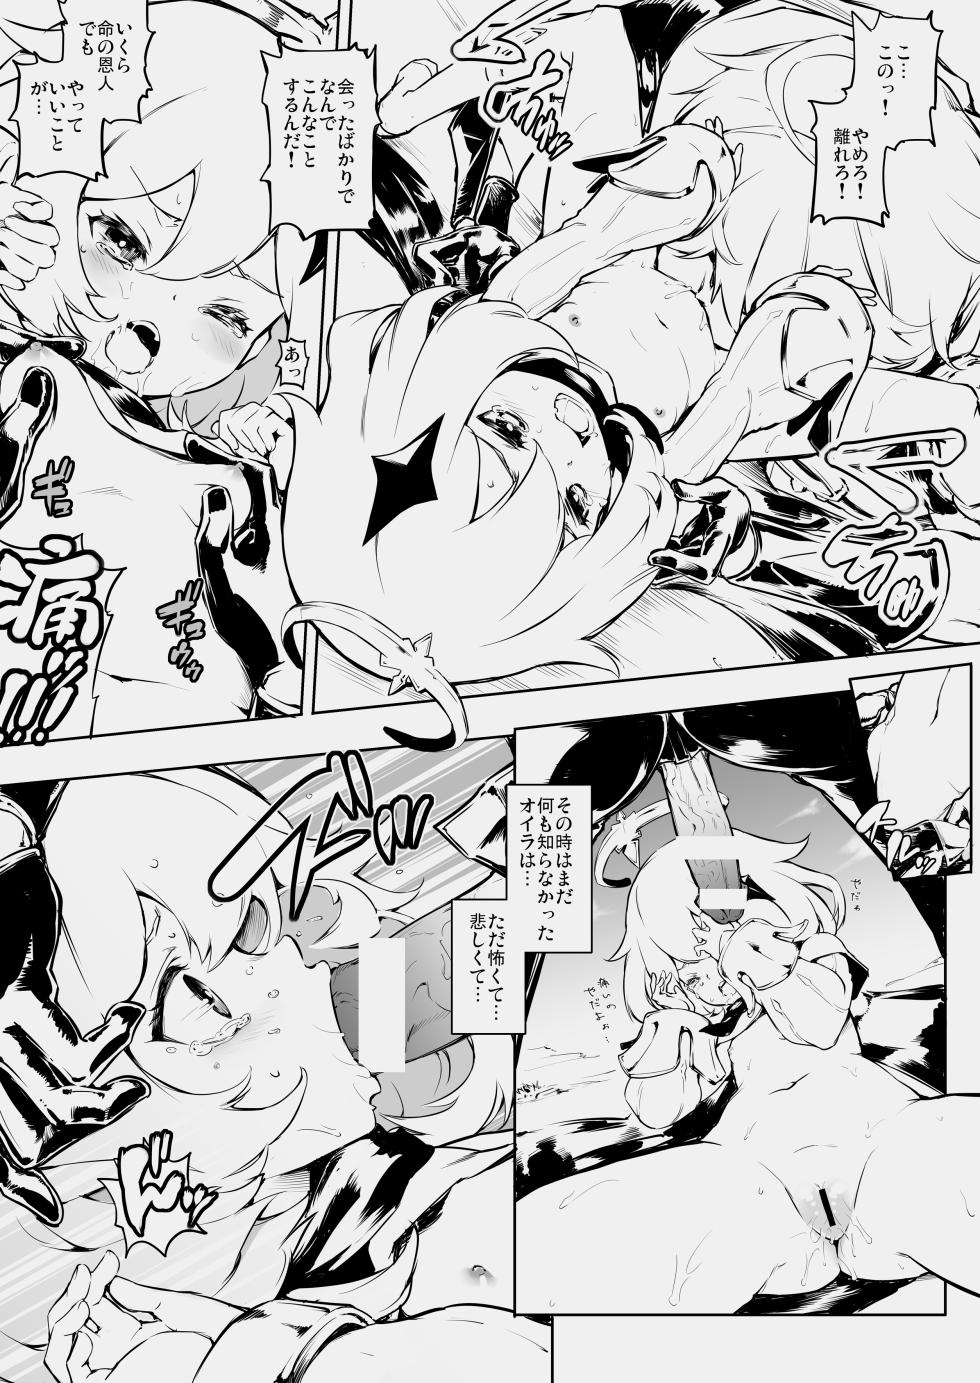 [1000mm] Paimon Ecchi Manga (Genshin Impact) - Page 3